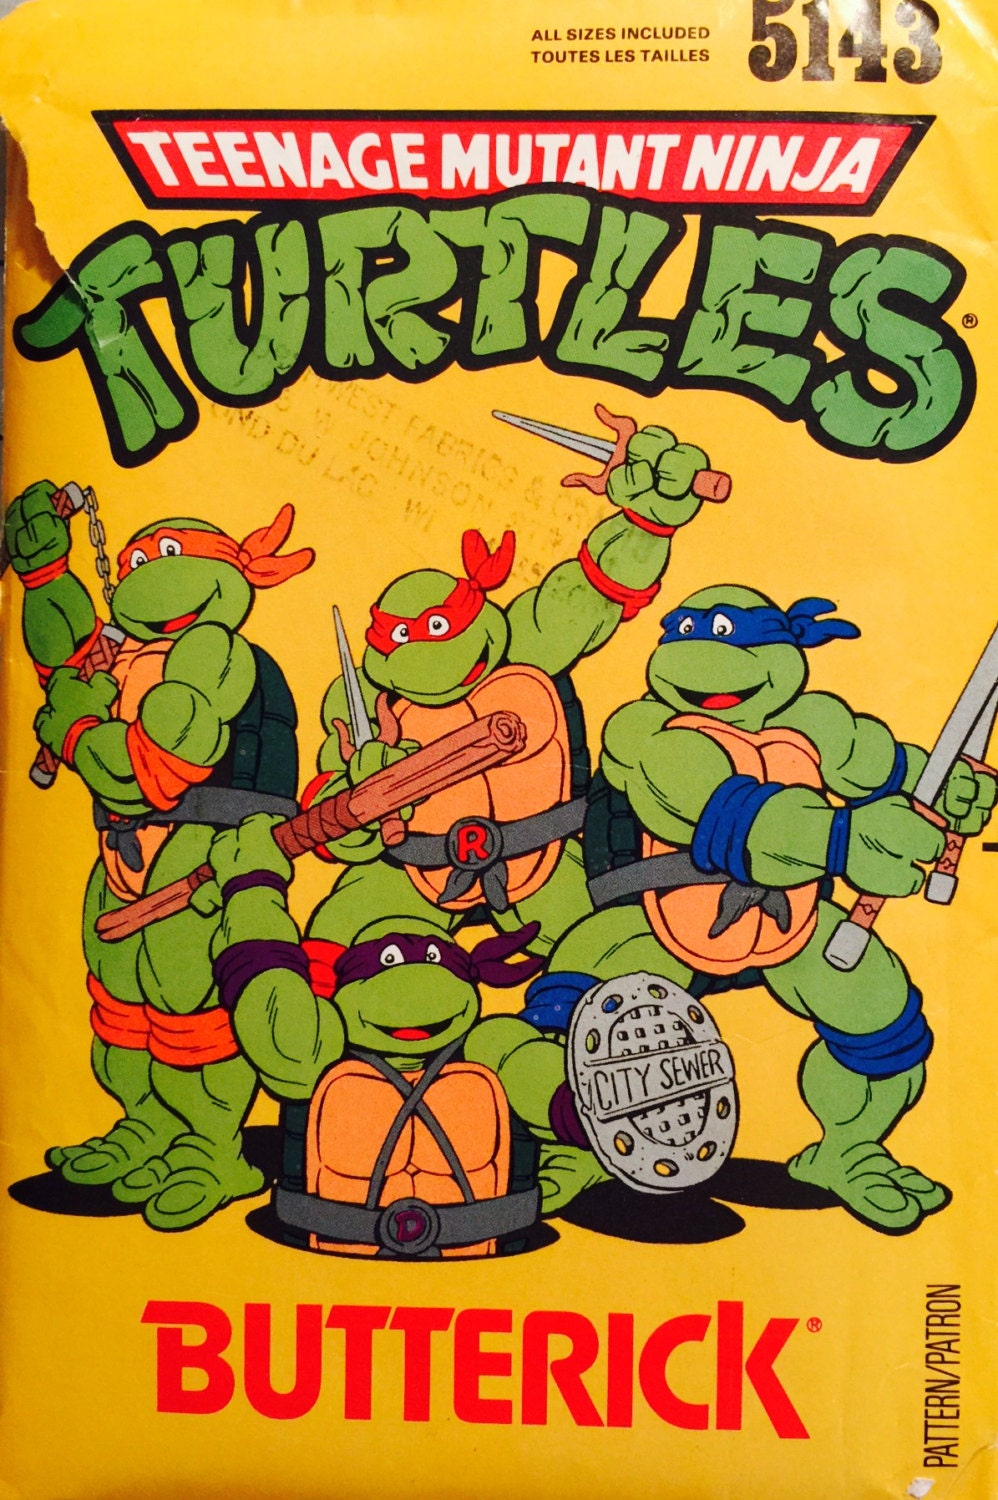 Girls' and boys' Teenage Mutant Ninja Turtle playsuit pattern - Butterick 5143